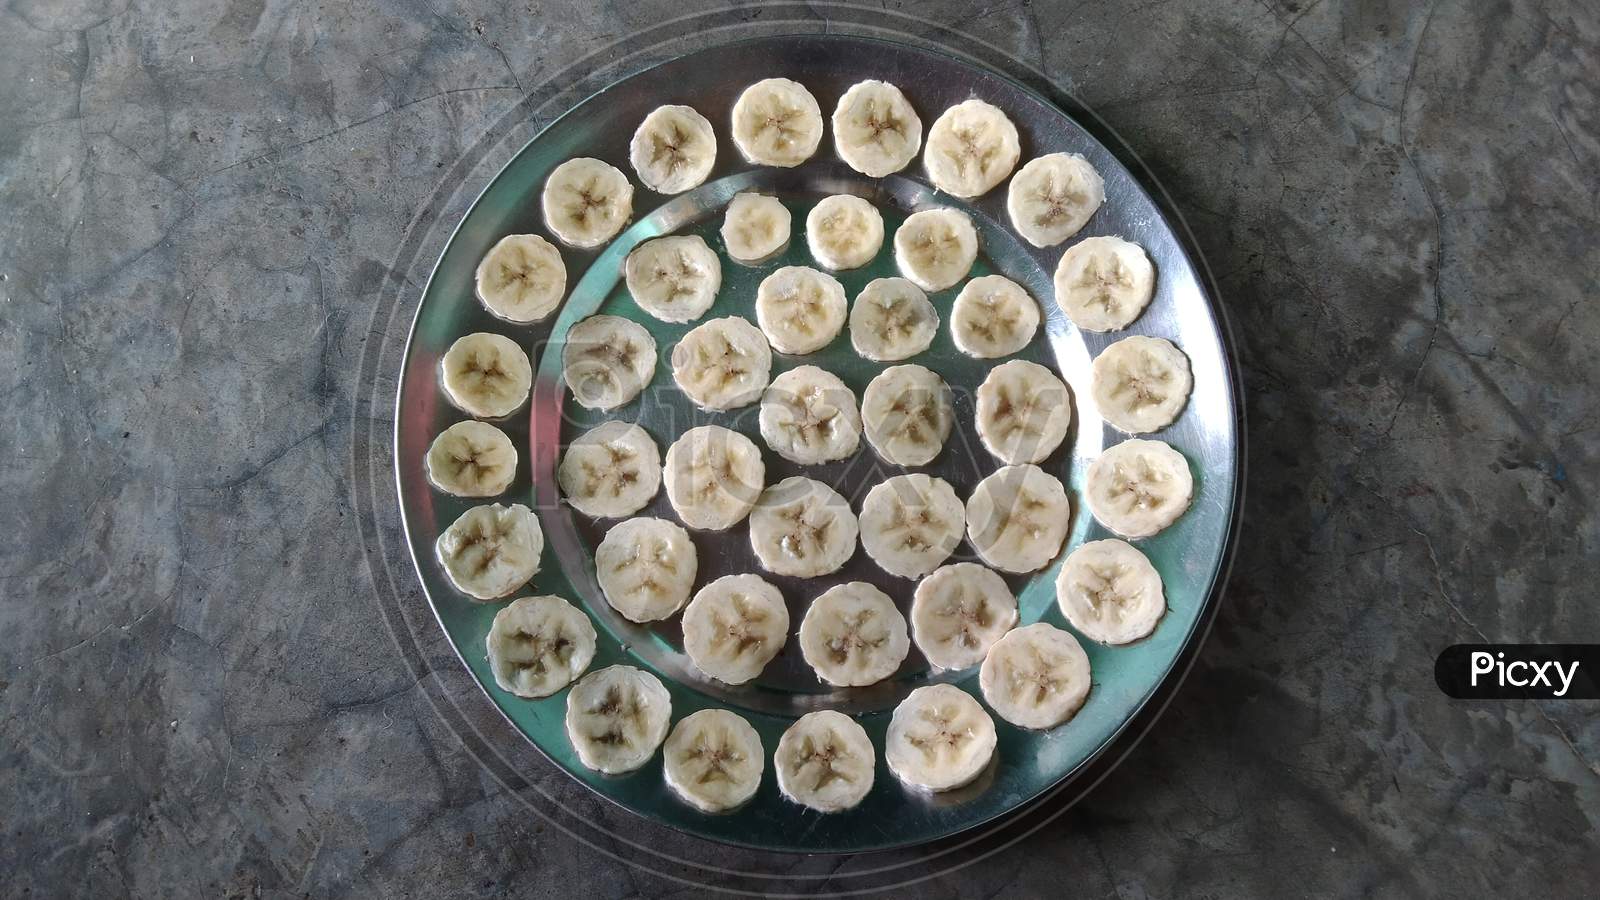 Banana slice in plate, fruit sliced